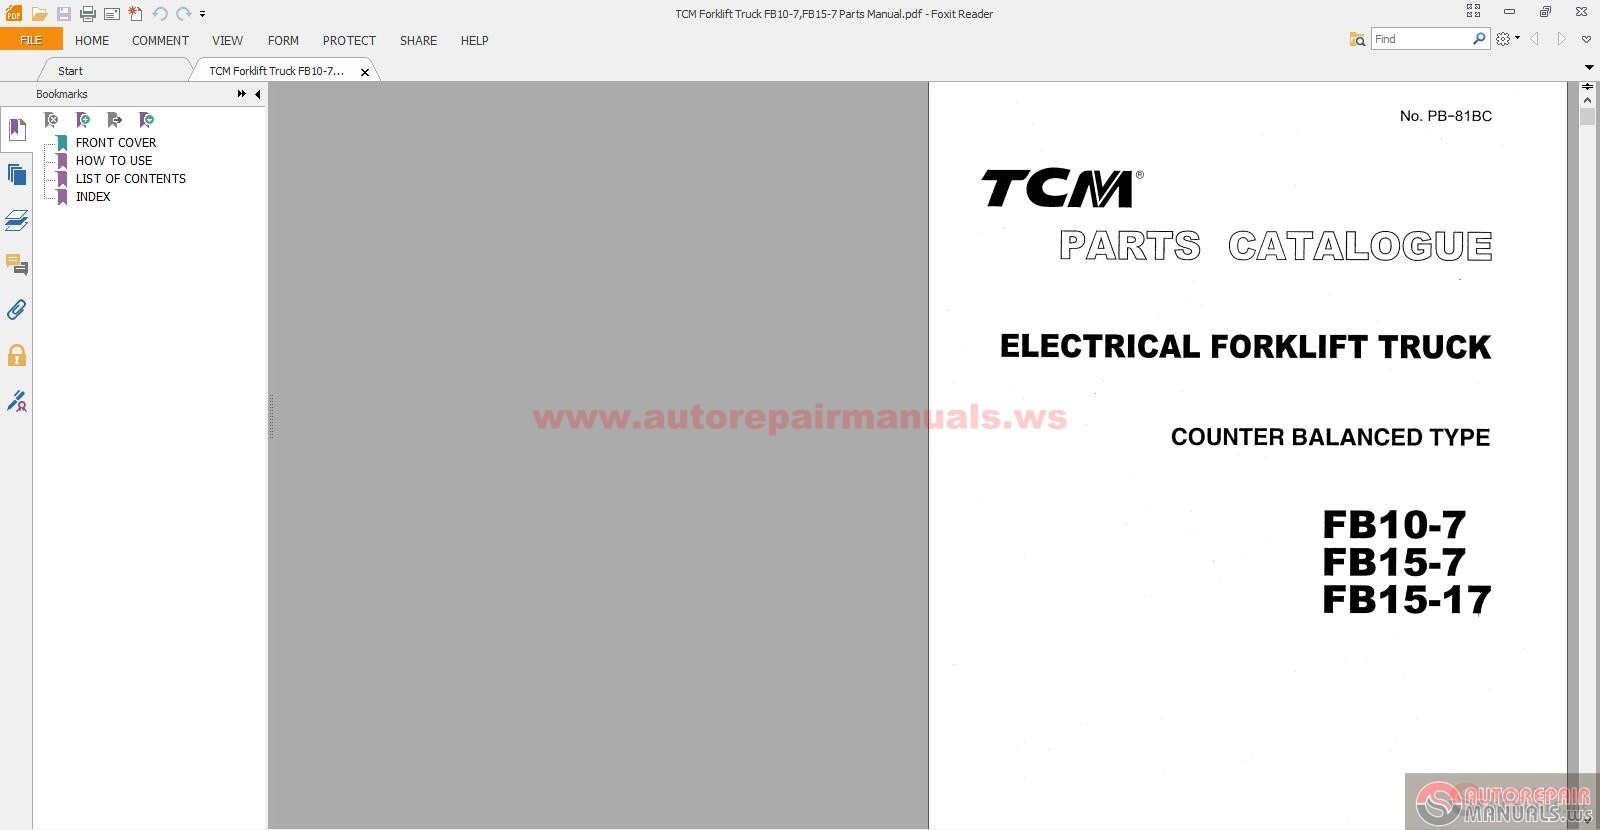 Tcm Forklift Truck Fb10 7 Fb15 7 Parts Manual Auto Repair Manual Forum Heavy Equipment Forums Download Repair Workshop Manual